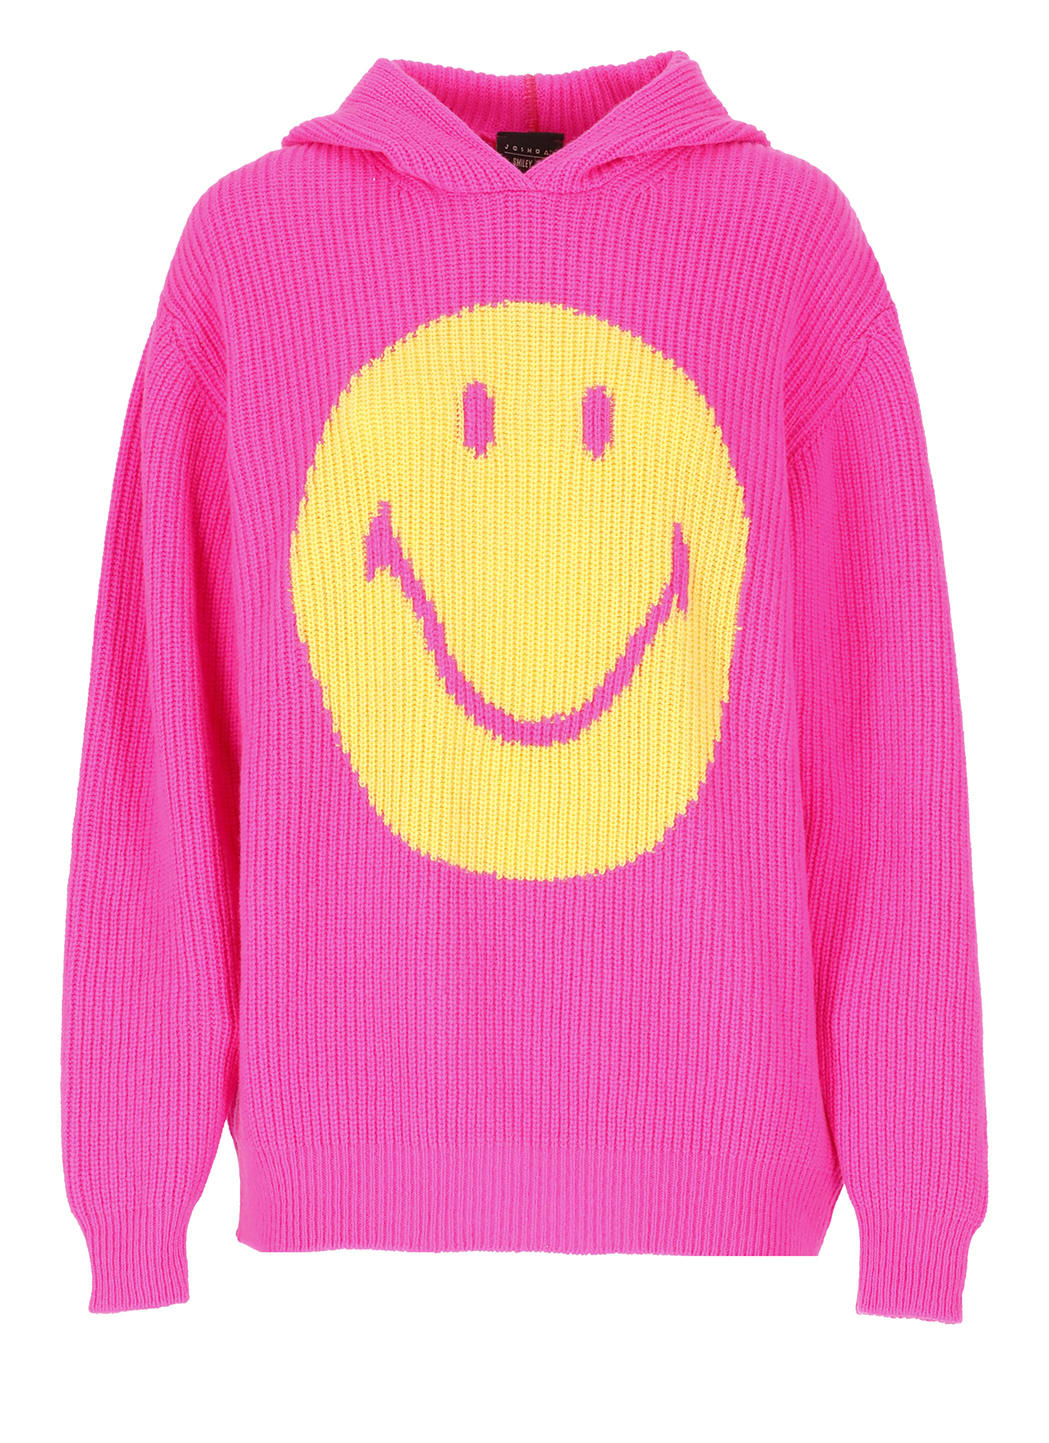 Joshua Sanders Knitted Smiley Sweatshirt